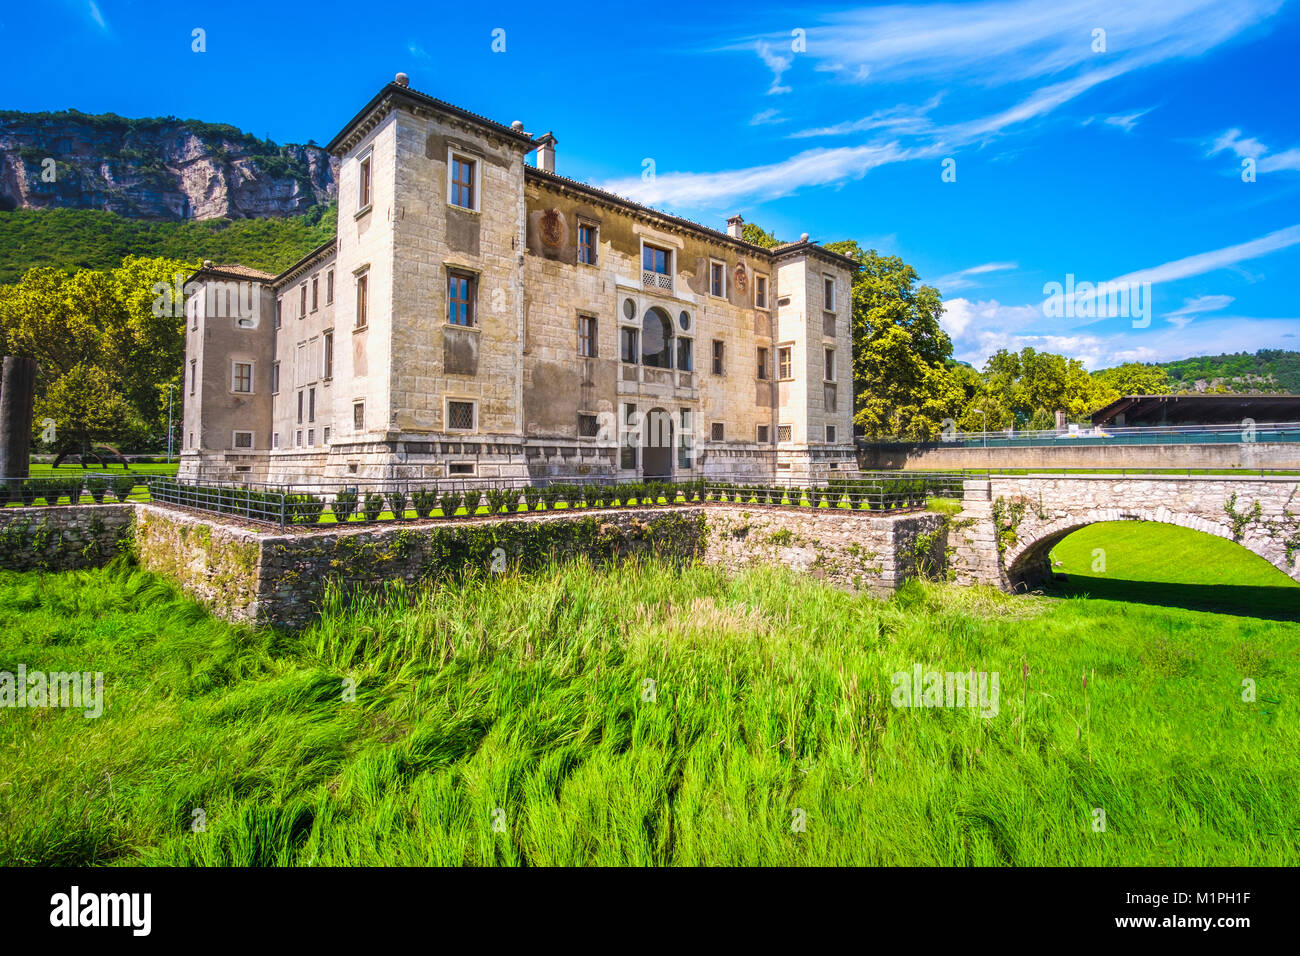 Burggraben fosse trockenes Gras Albere Palace in Trient Trentino Italien Stockfoto